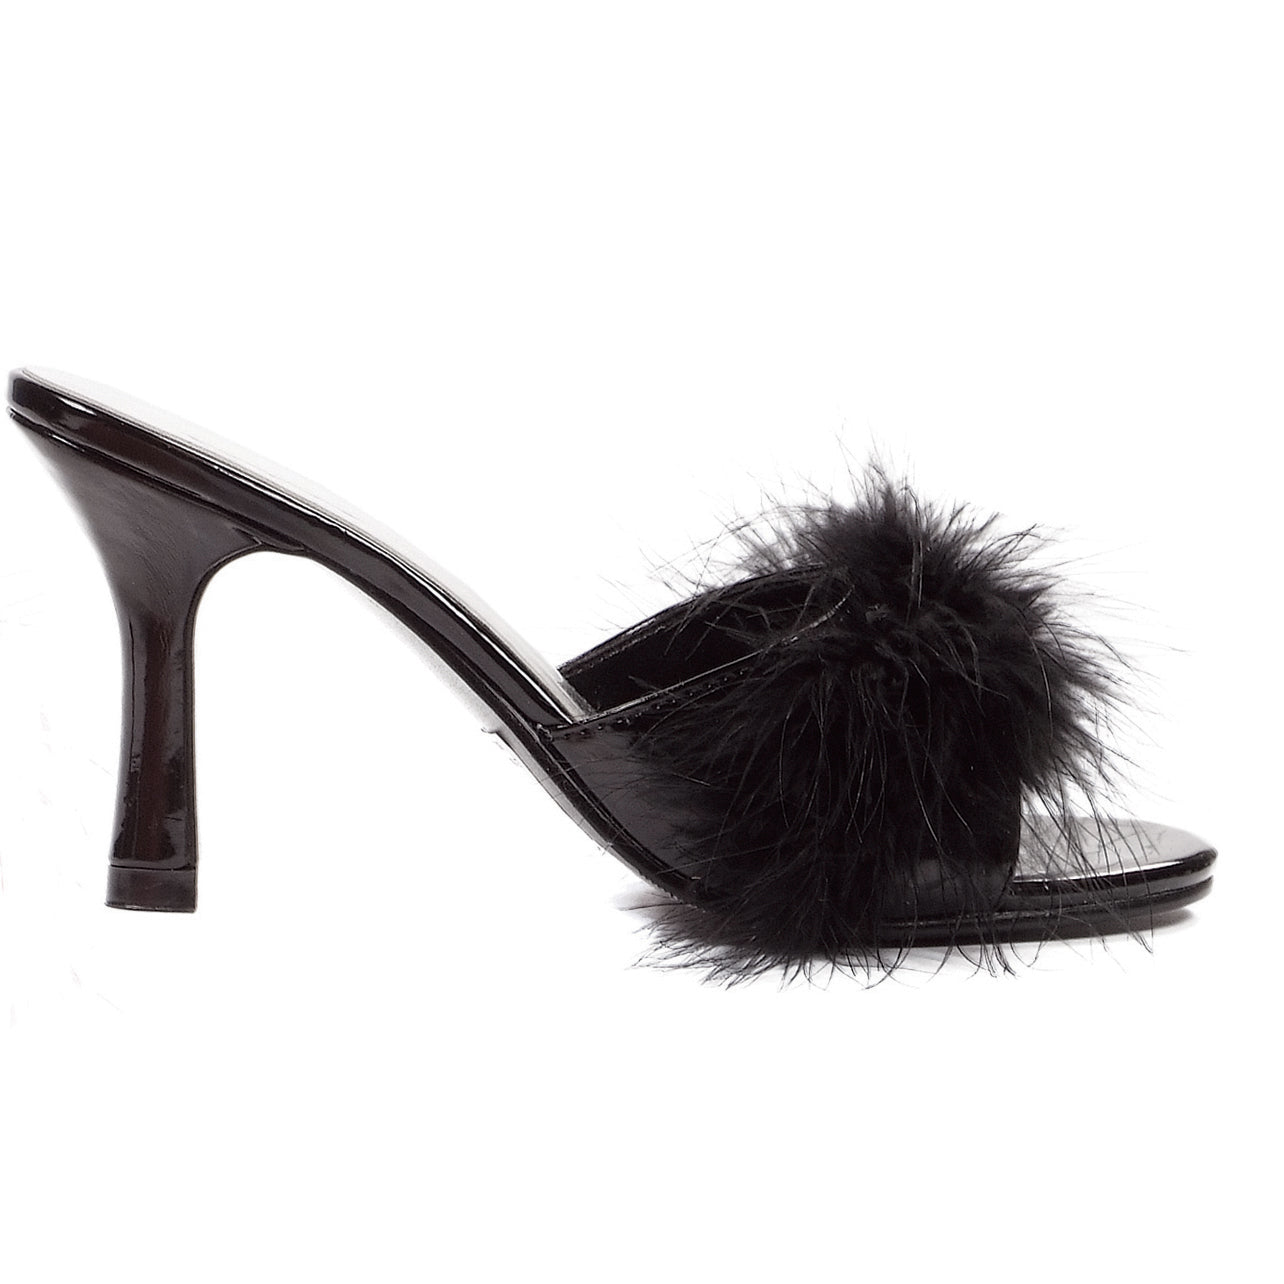 361-SASHA Ellie Shoes 3.5" Heel Maribou Slippers. EXTENDED S 3 INCH HEEL